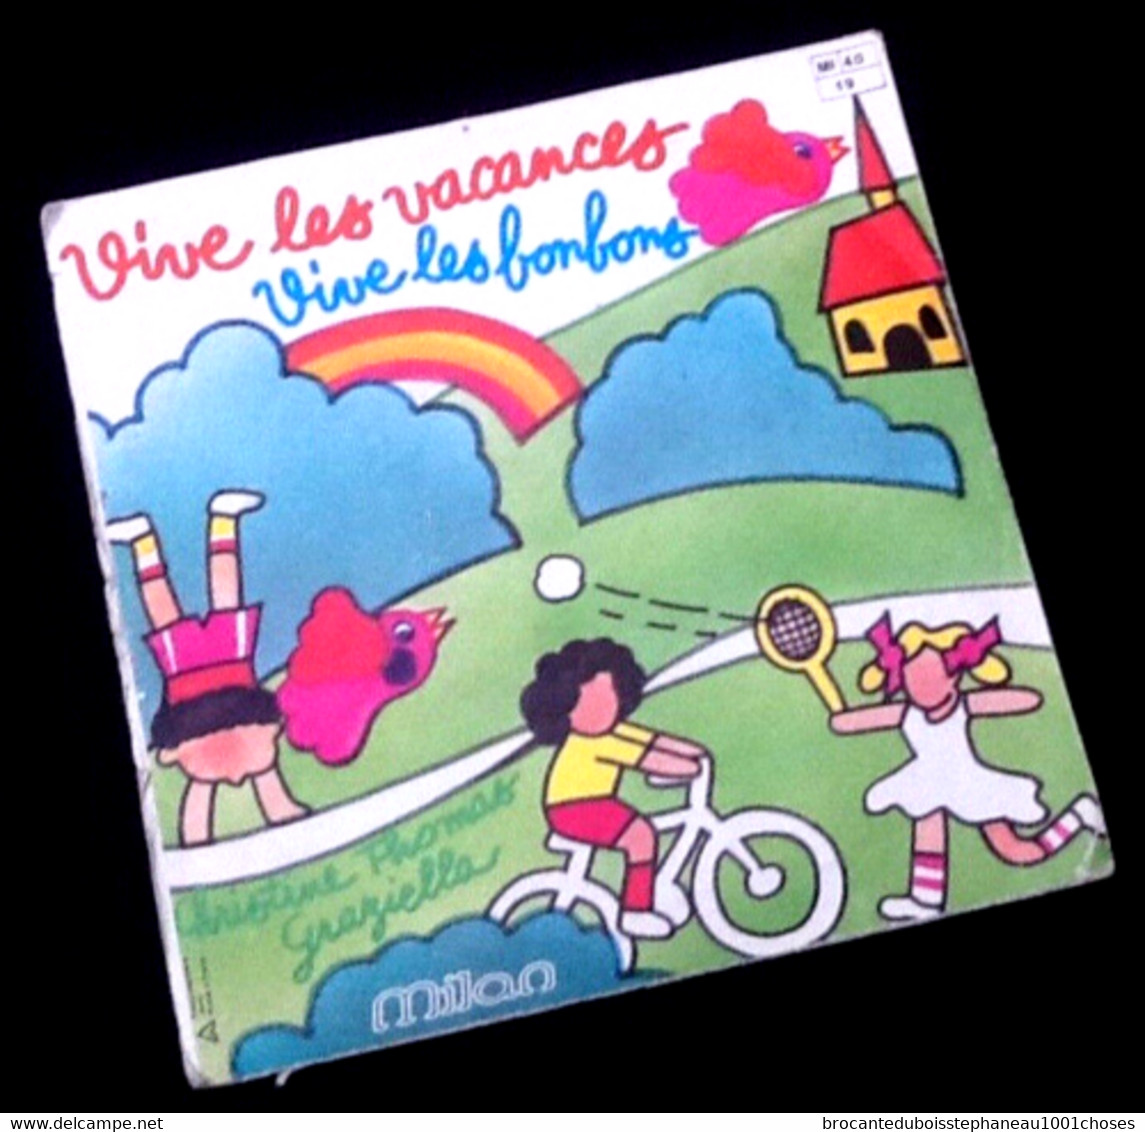 Vinyle 45 Tours Christine Thomas Graziella Vive Les Vacances Vive Les Bonbons (1980) Milan MI 40 - Bambini